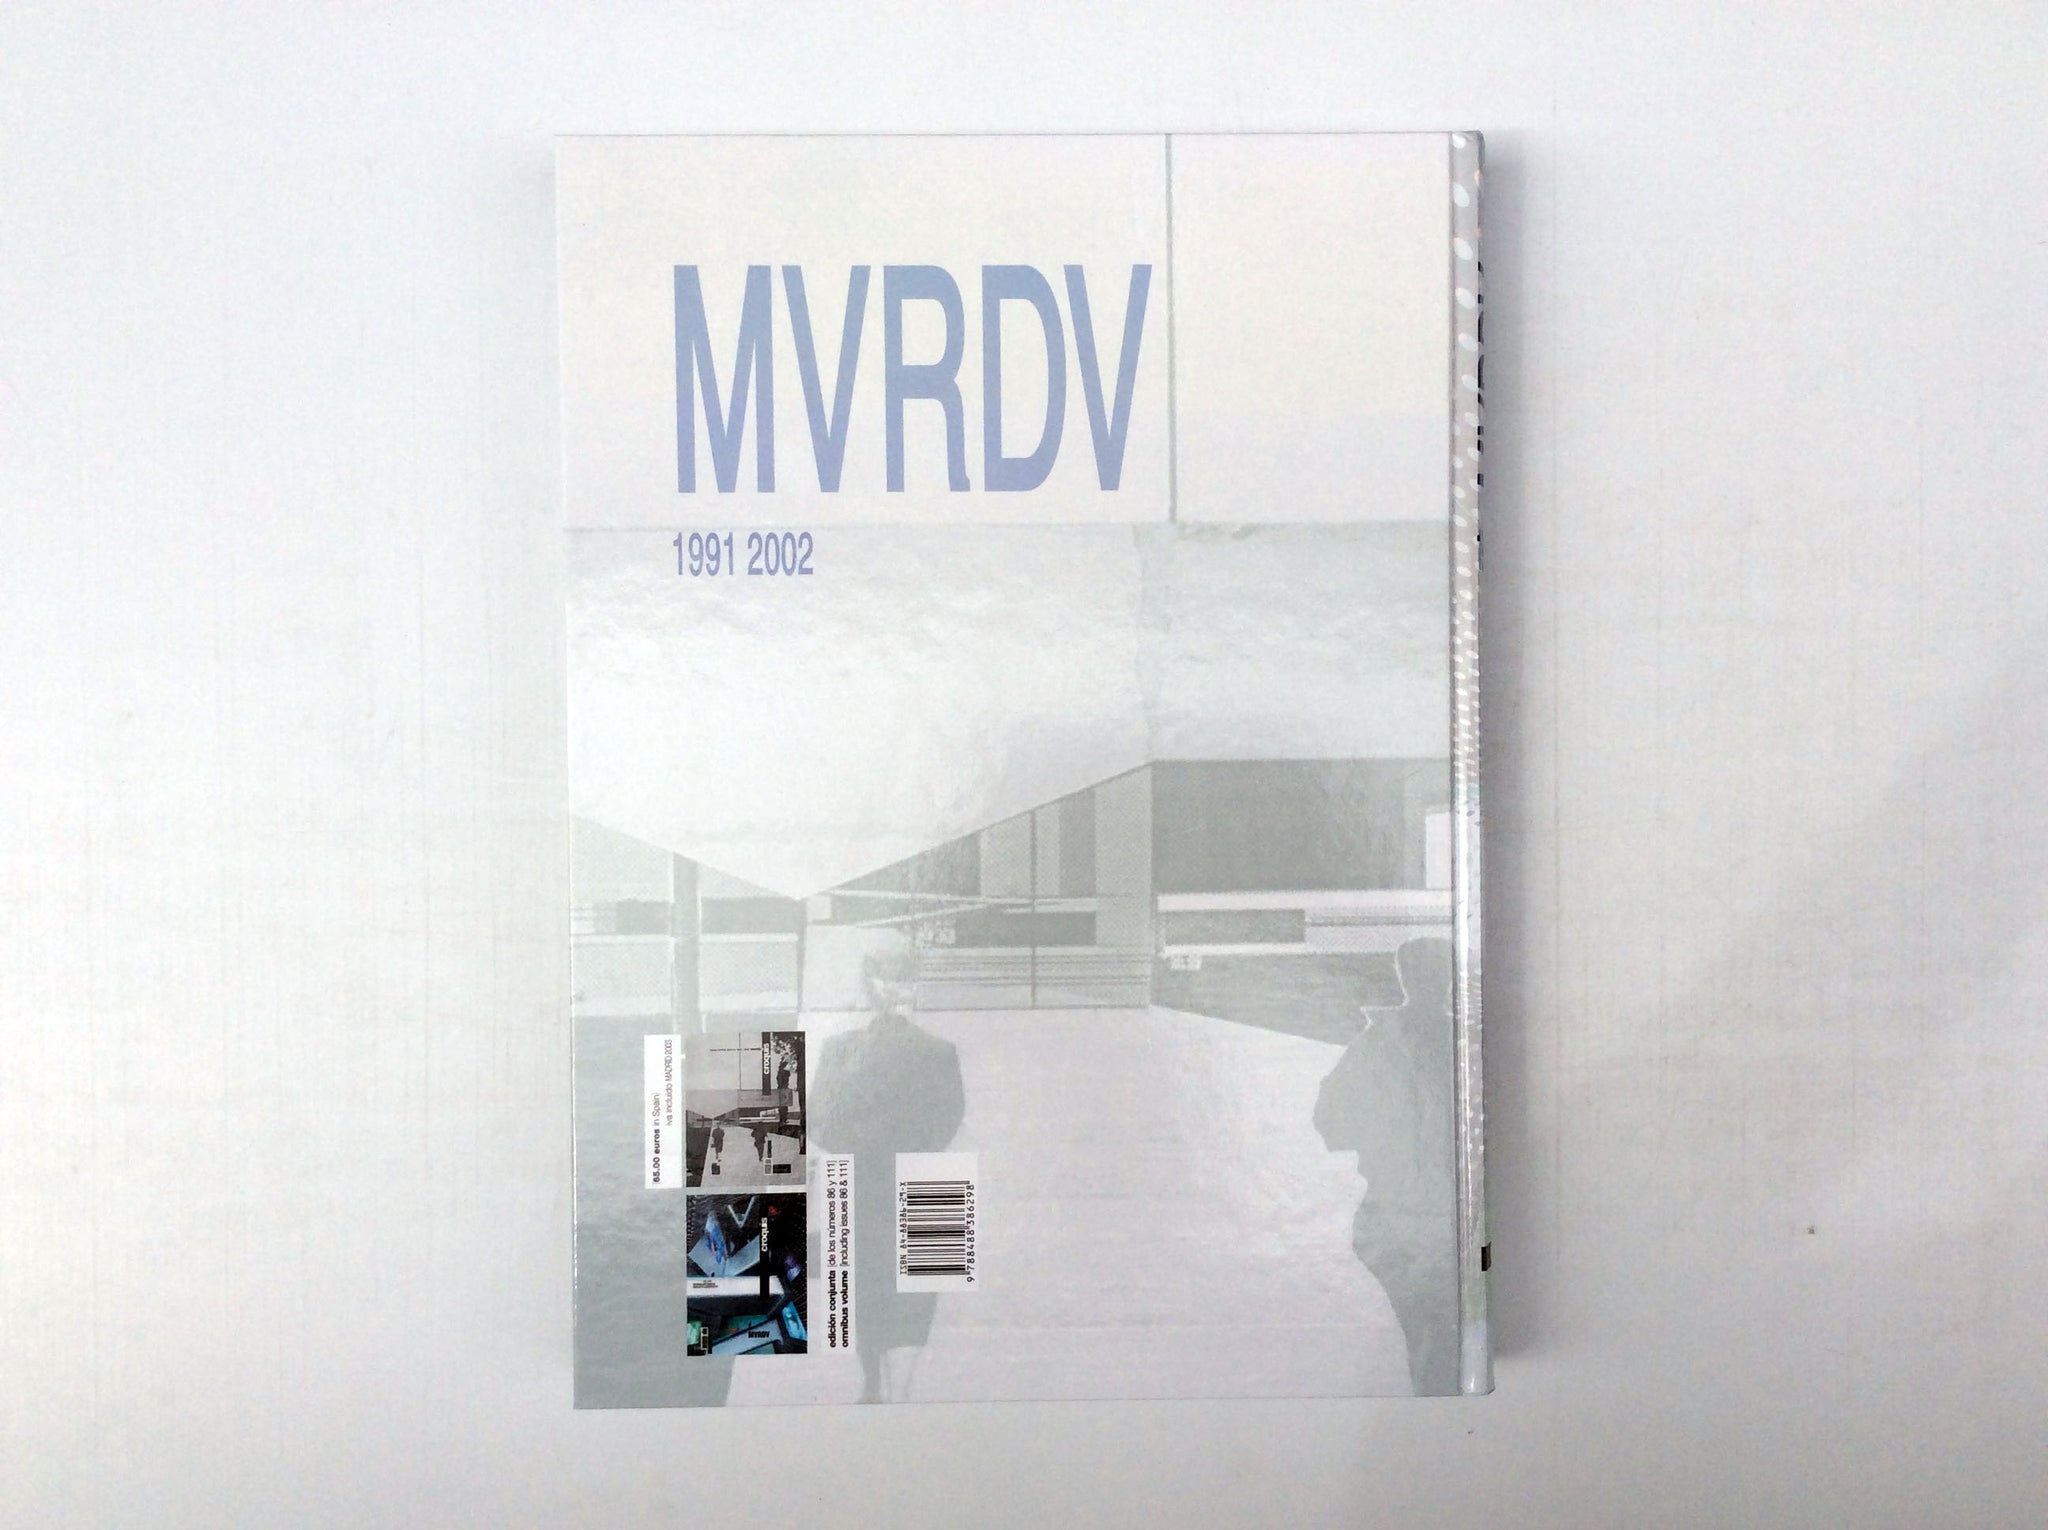 El Croquis 86+111: MVRDV hb – Bookshop by Uro